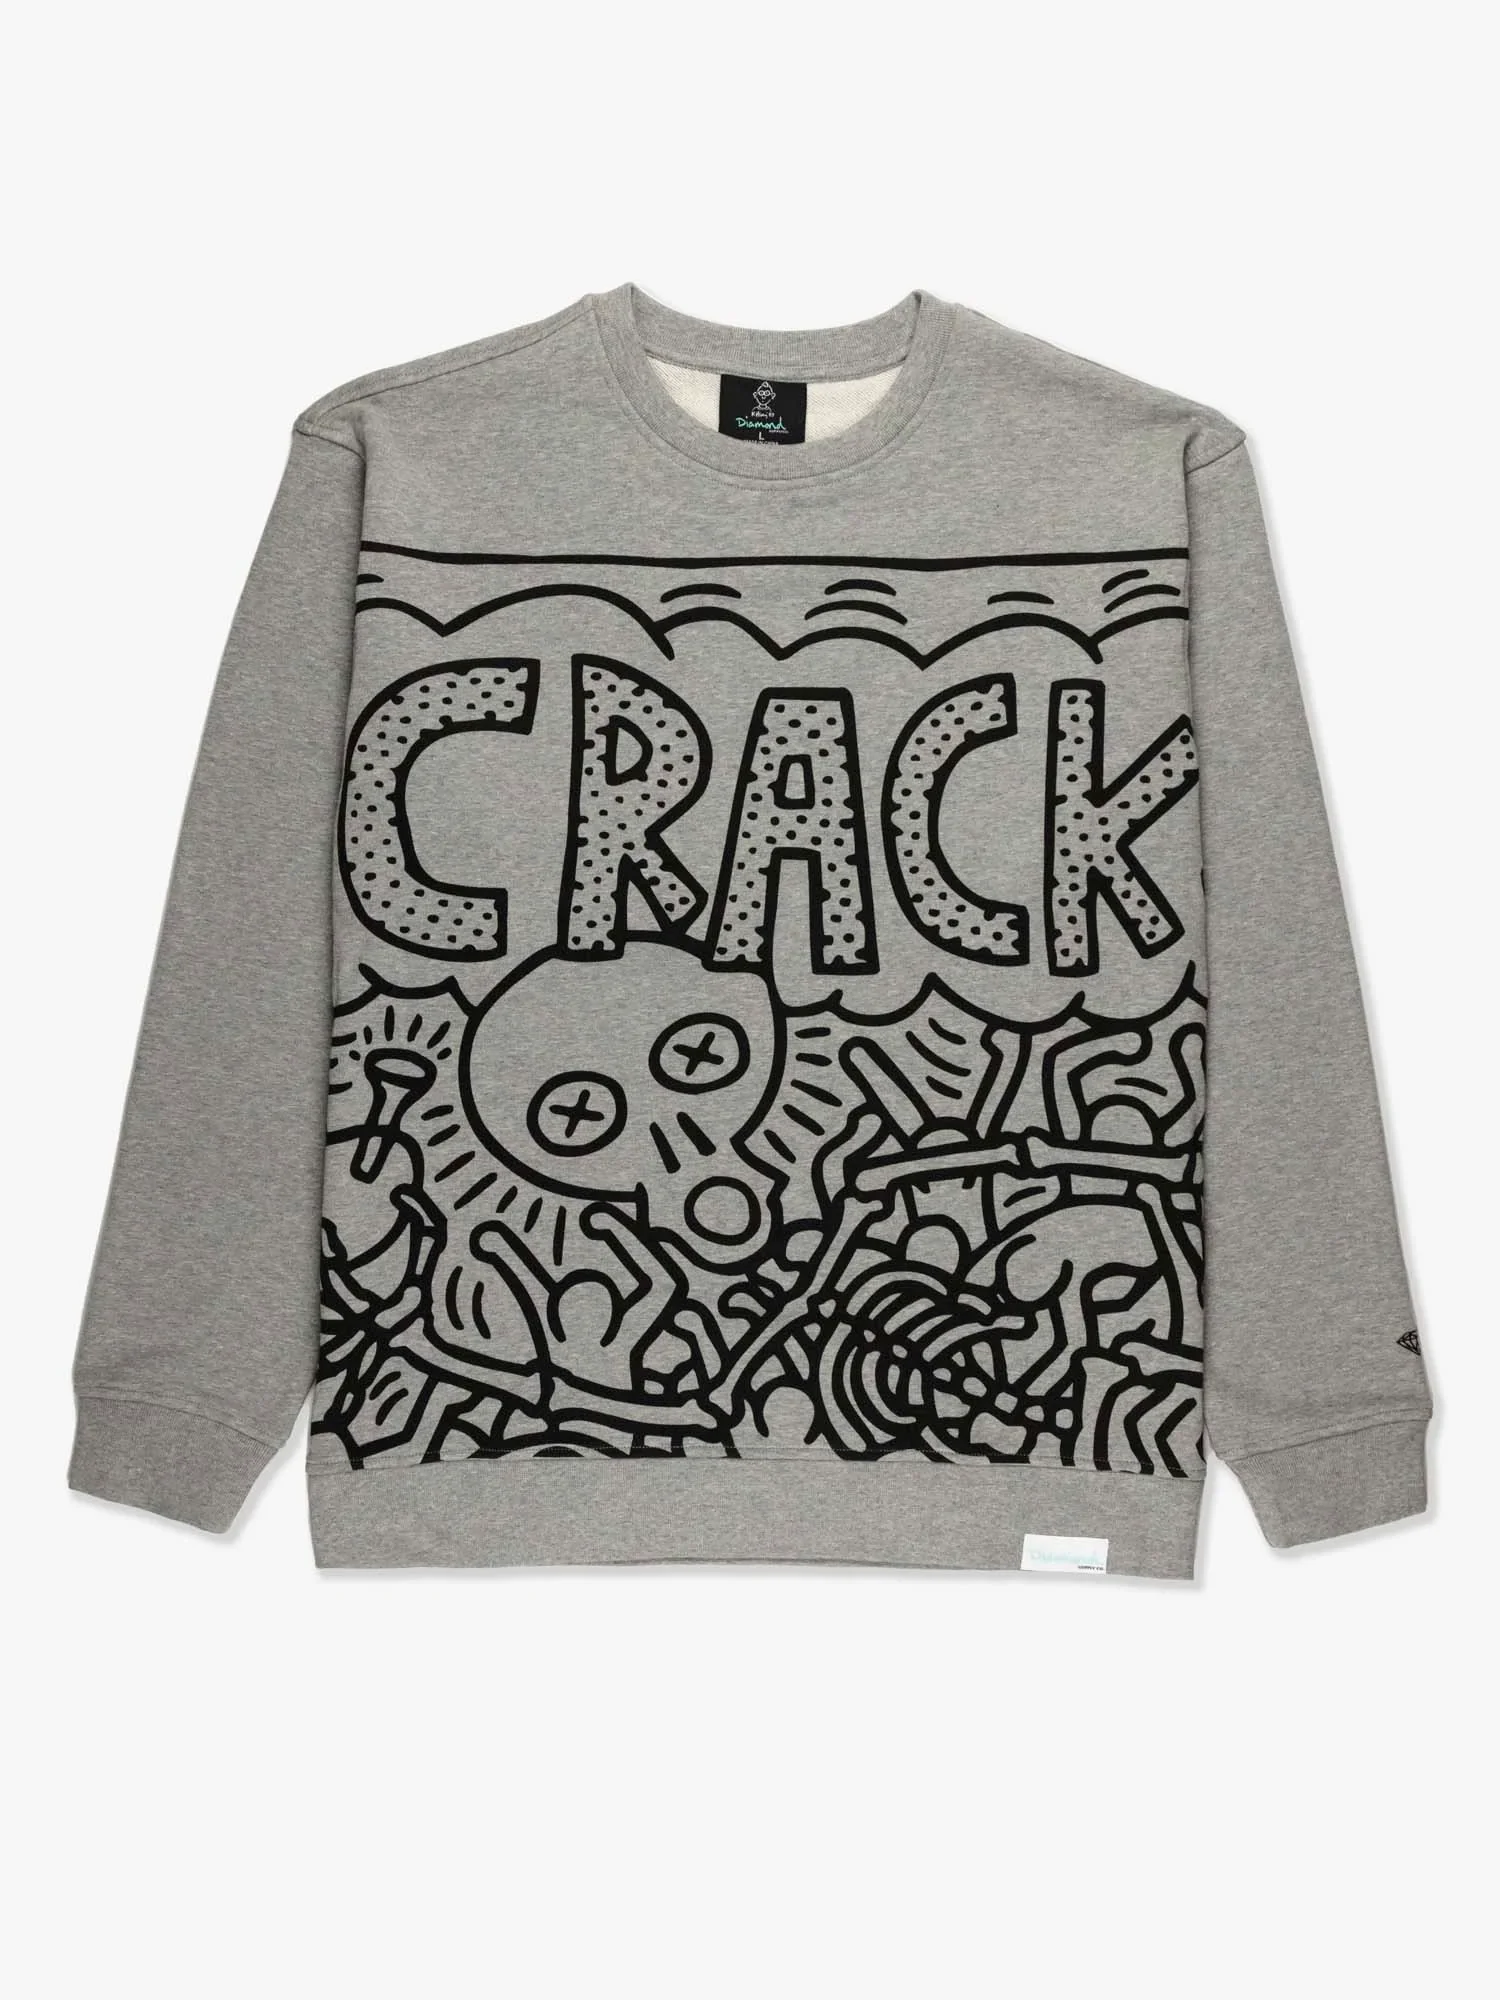 Image of Crack Is Wack Crewneck - Heather Grey